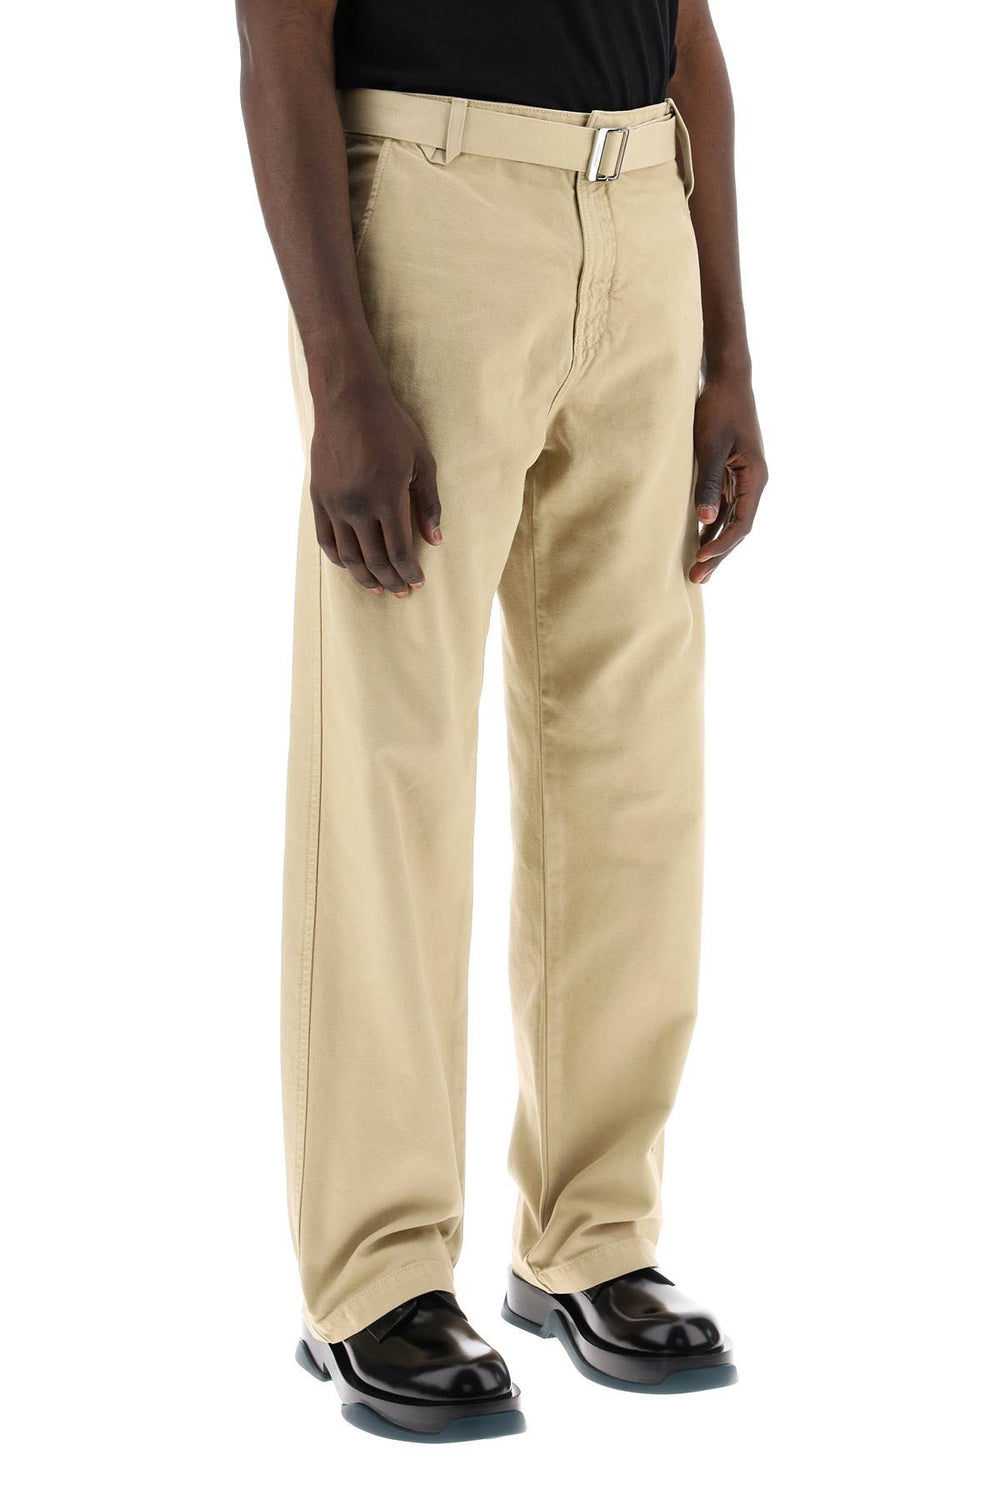 Jacquemus the brown pants-1